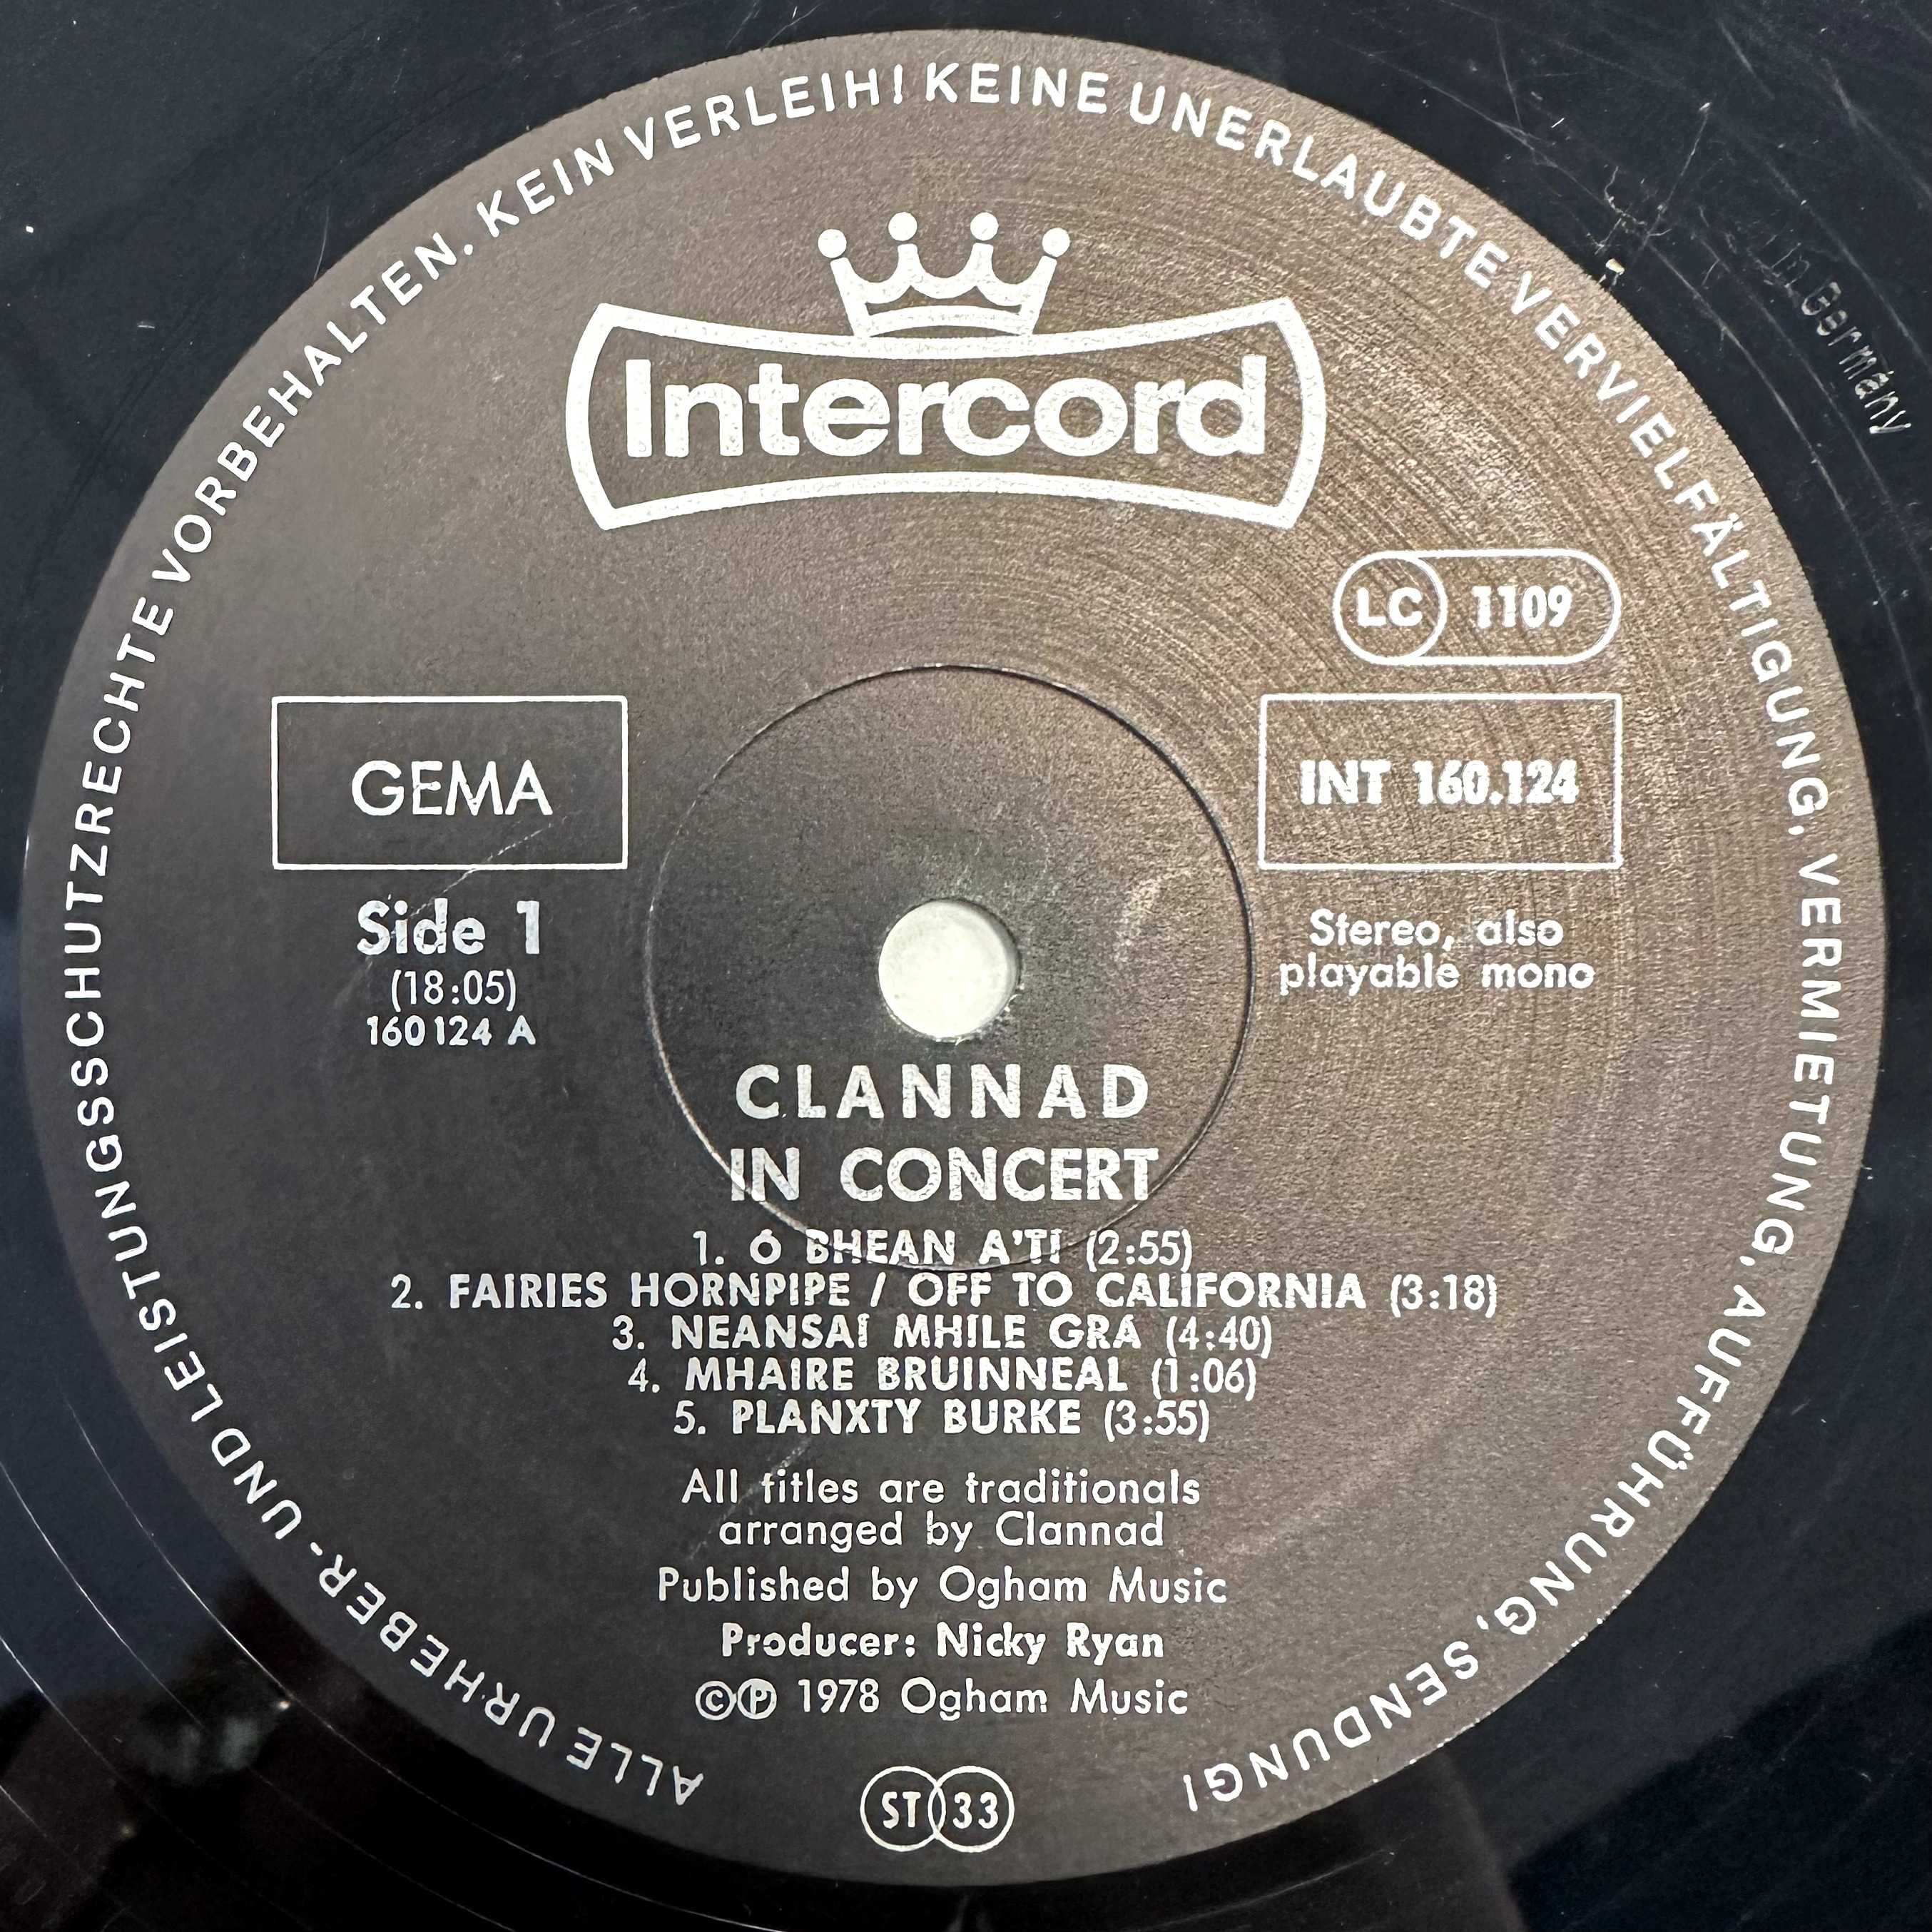 Clannad in Concert (Vinyl, 1978, Germany)